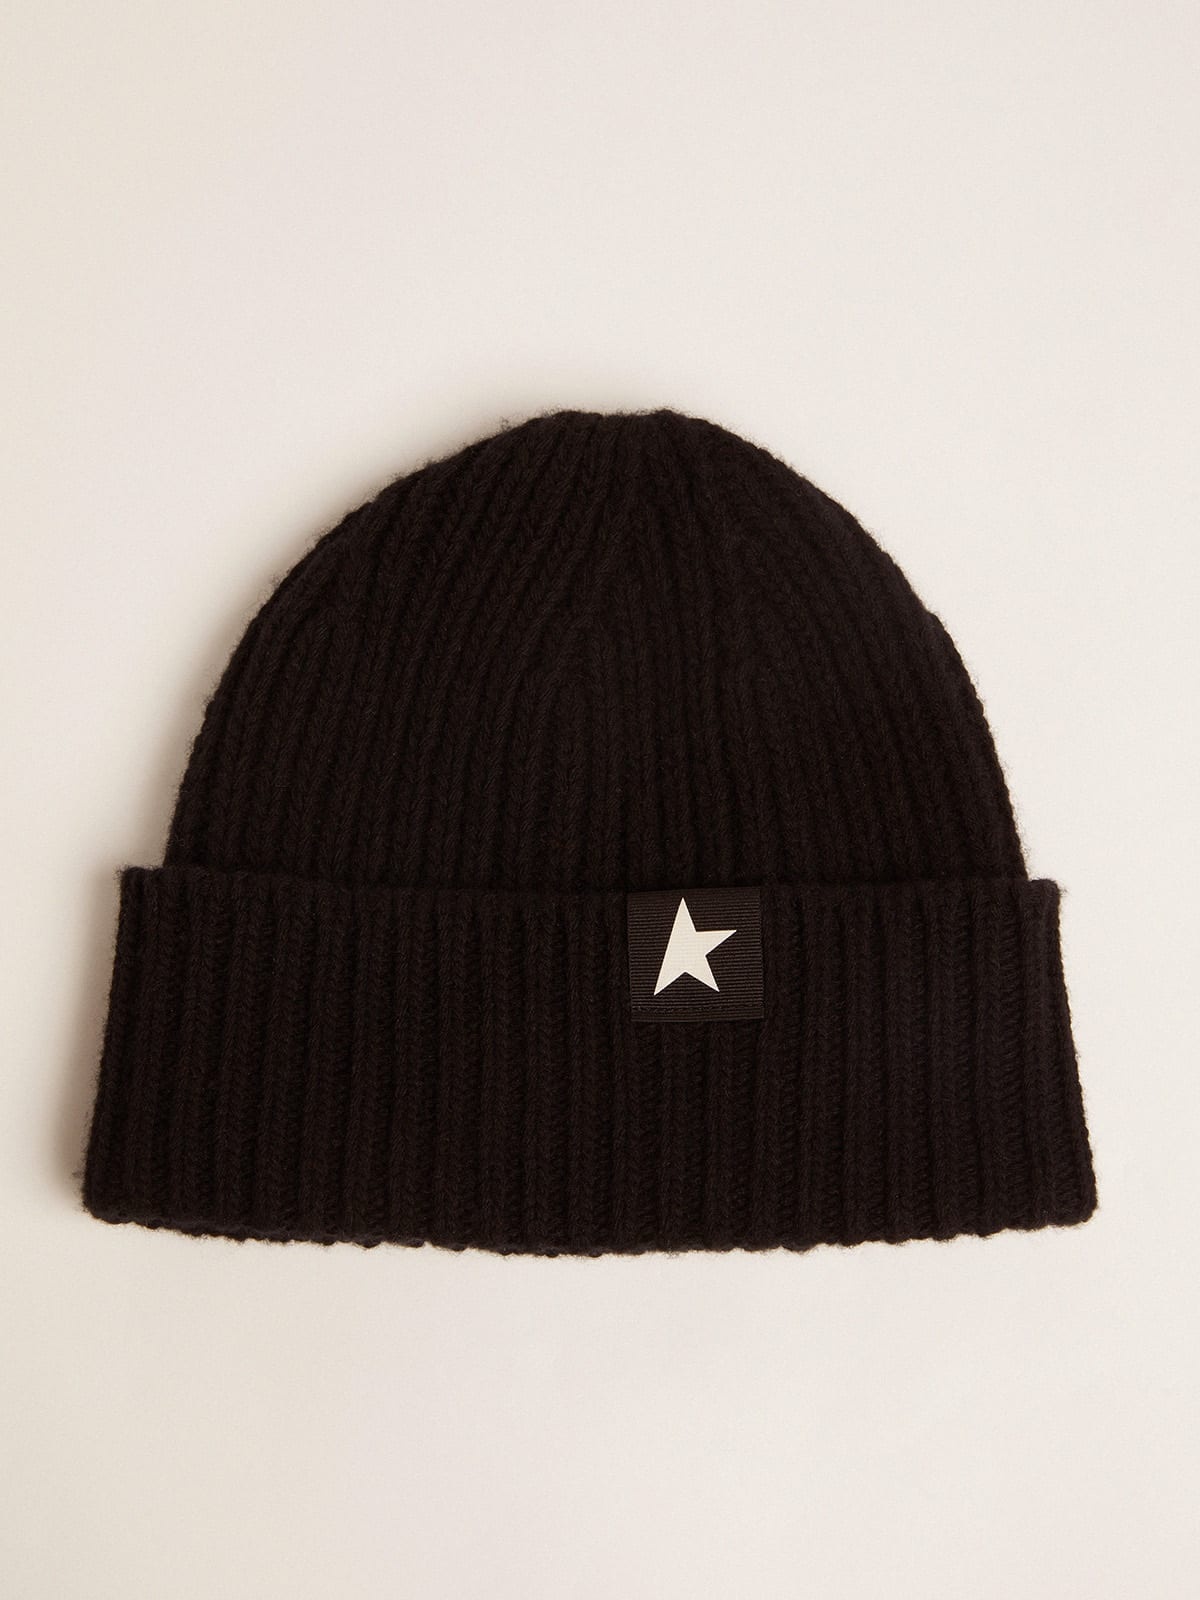 Black wool beanie with white star - 1